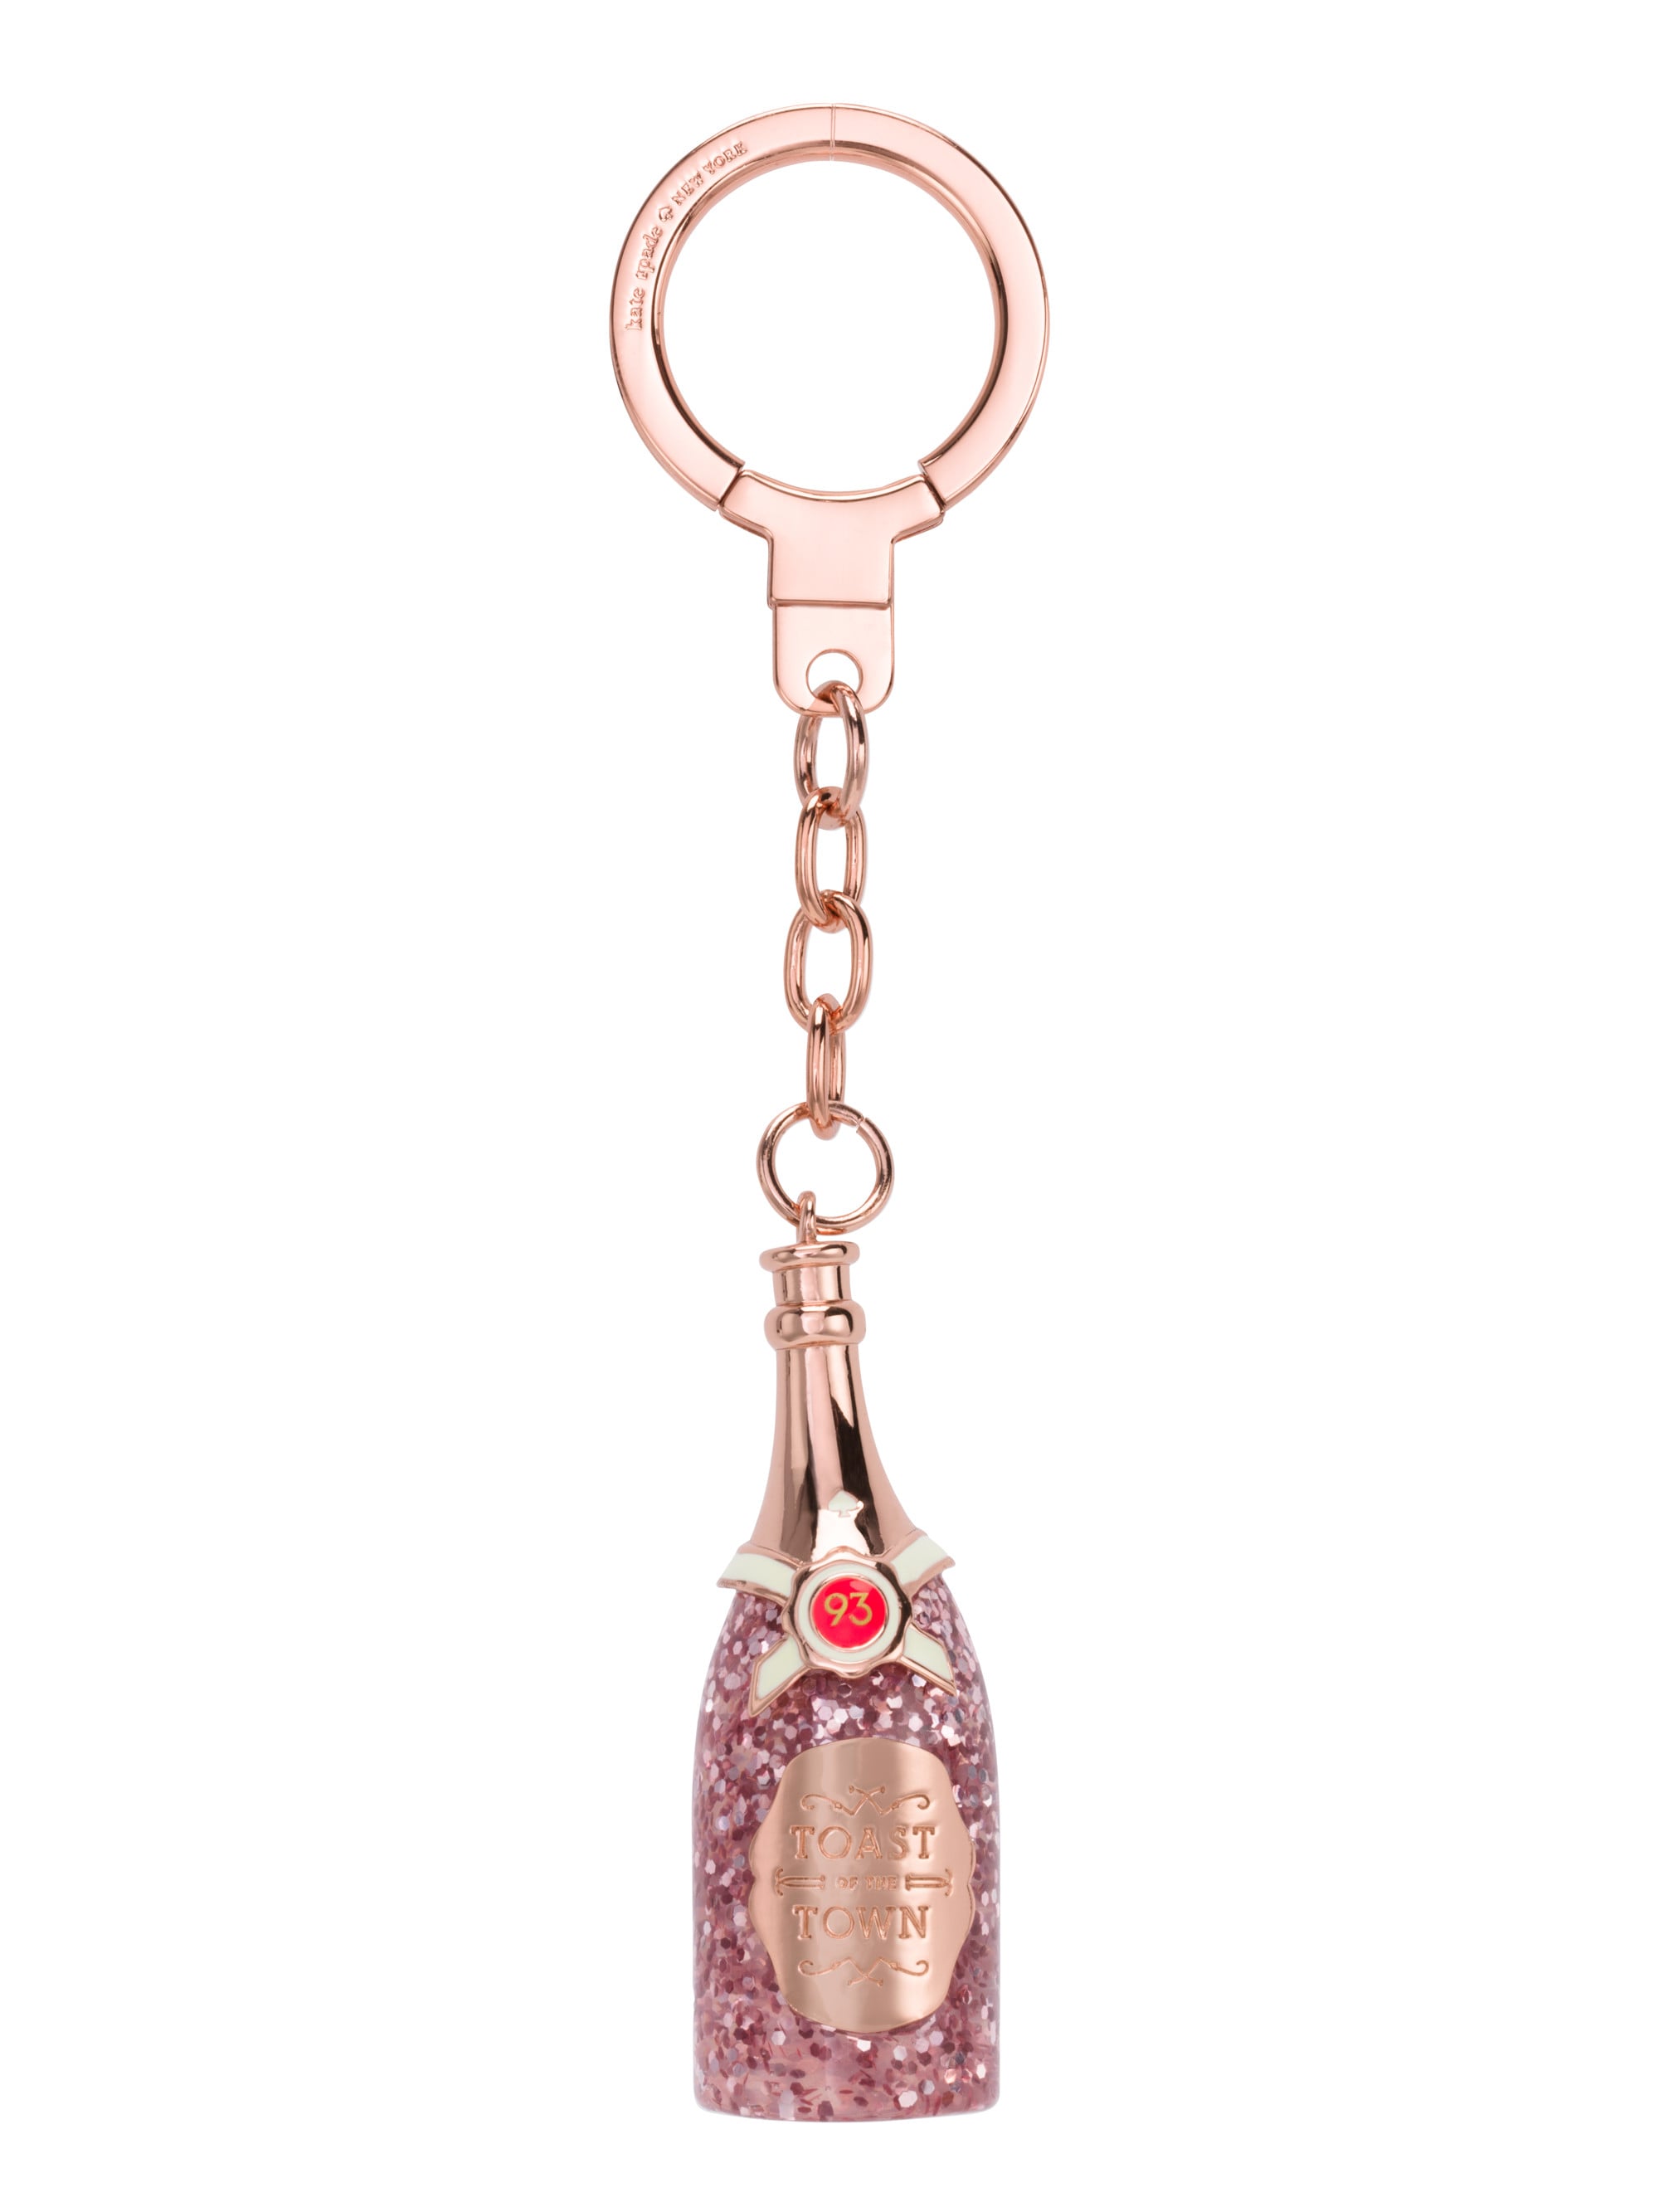 Kate Spade Champagne Bottle Keychain | Let's Pop Bottles! Kate Spade's New  Champagne Line Will Be on Your Holiday Wish List | POPSUGAR Fashion Photo 5